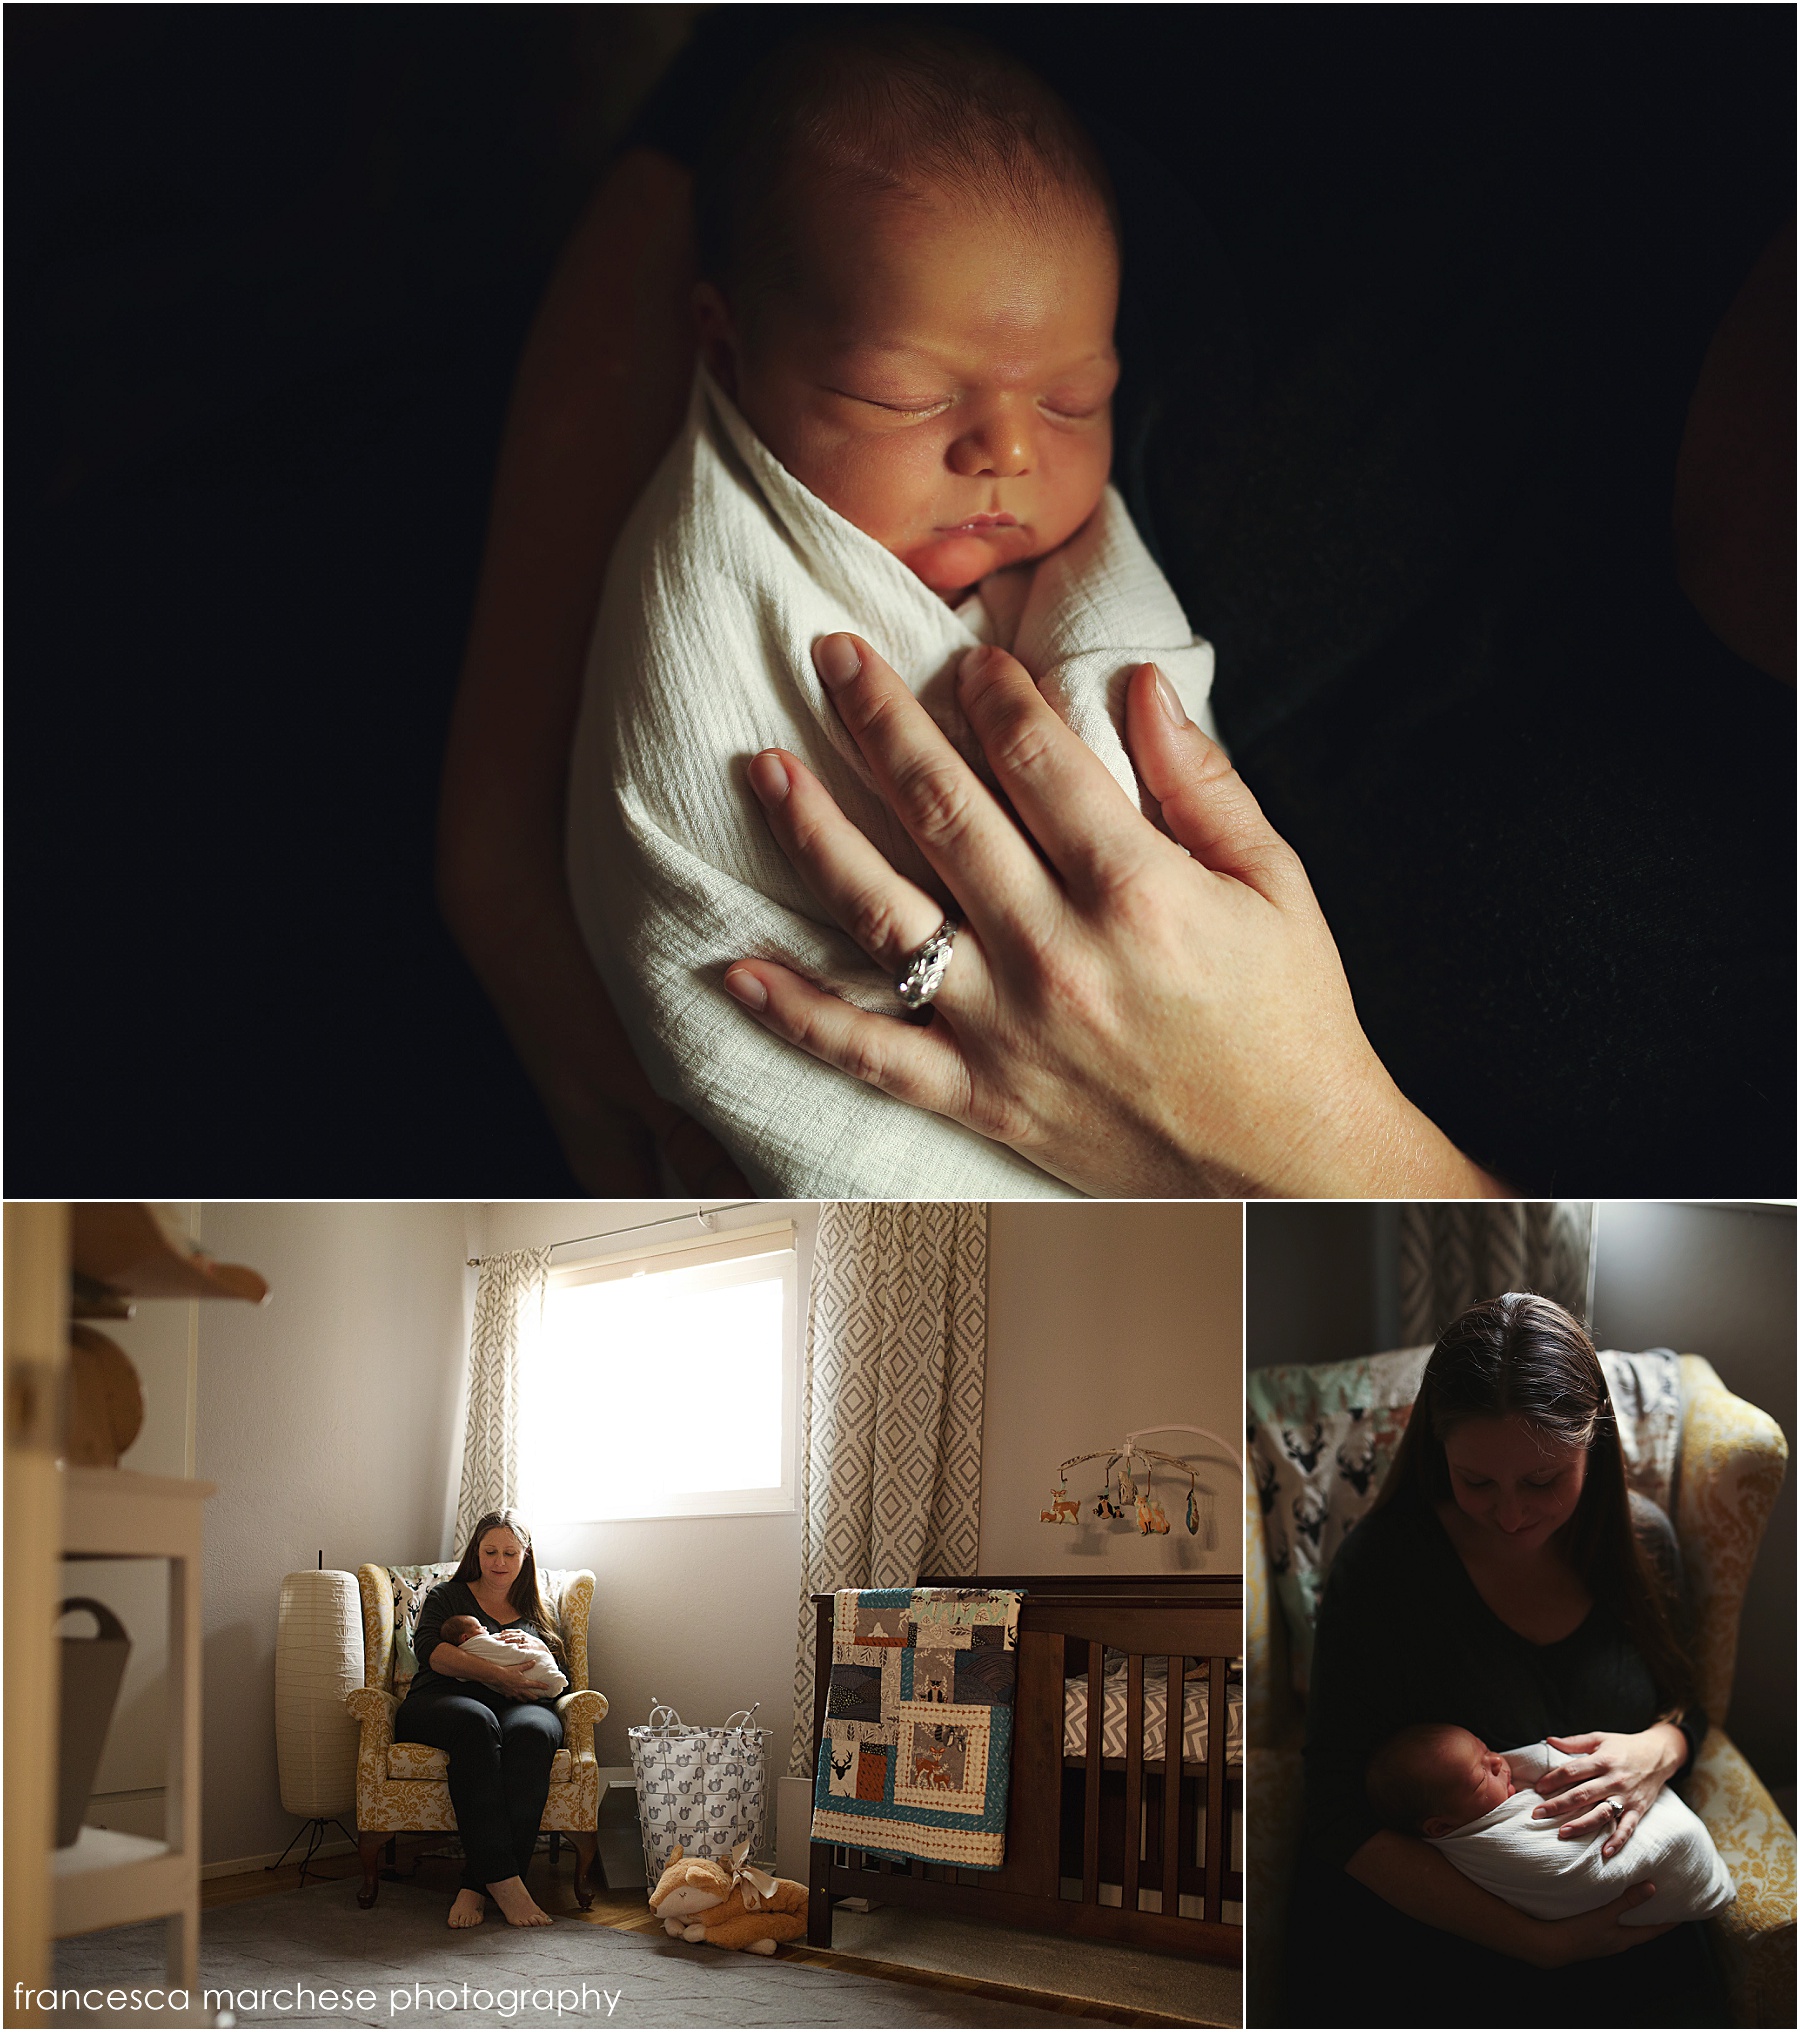 Francesca Marchese Photography - California Lifestyle Newborn Photographer  (2)